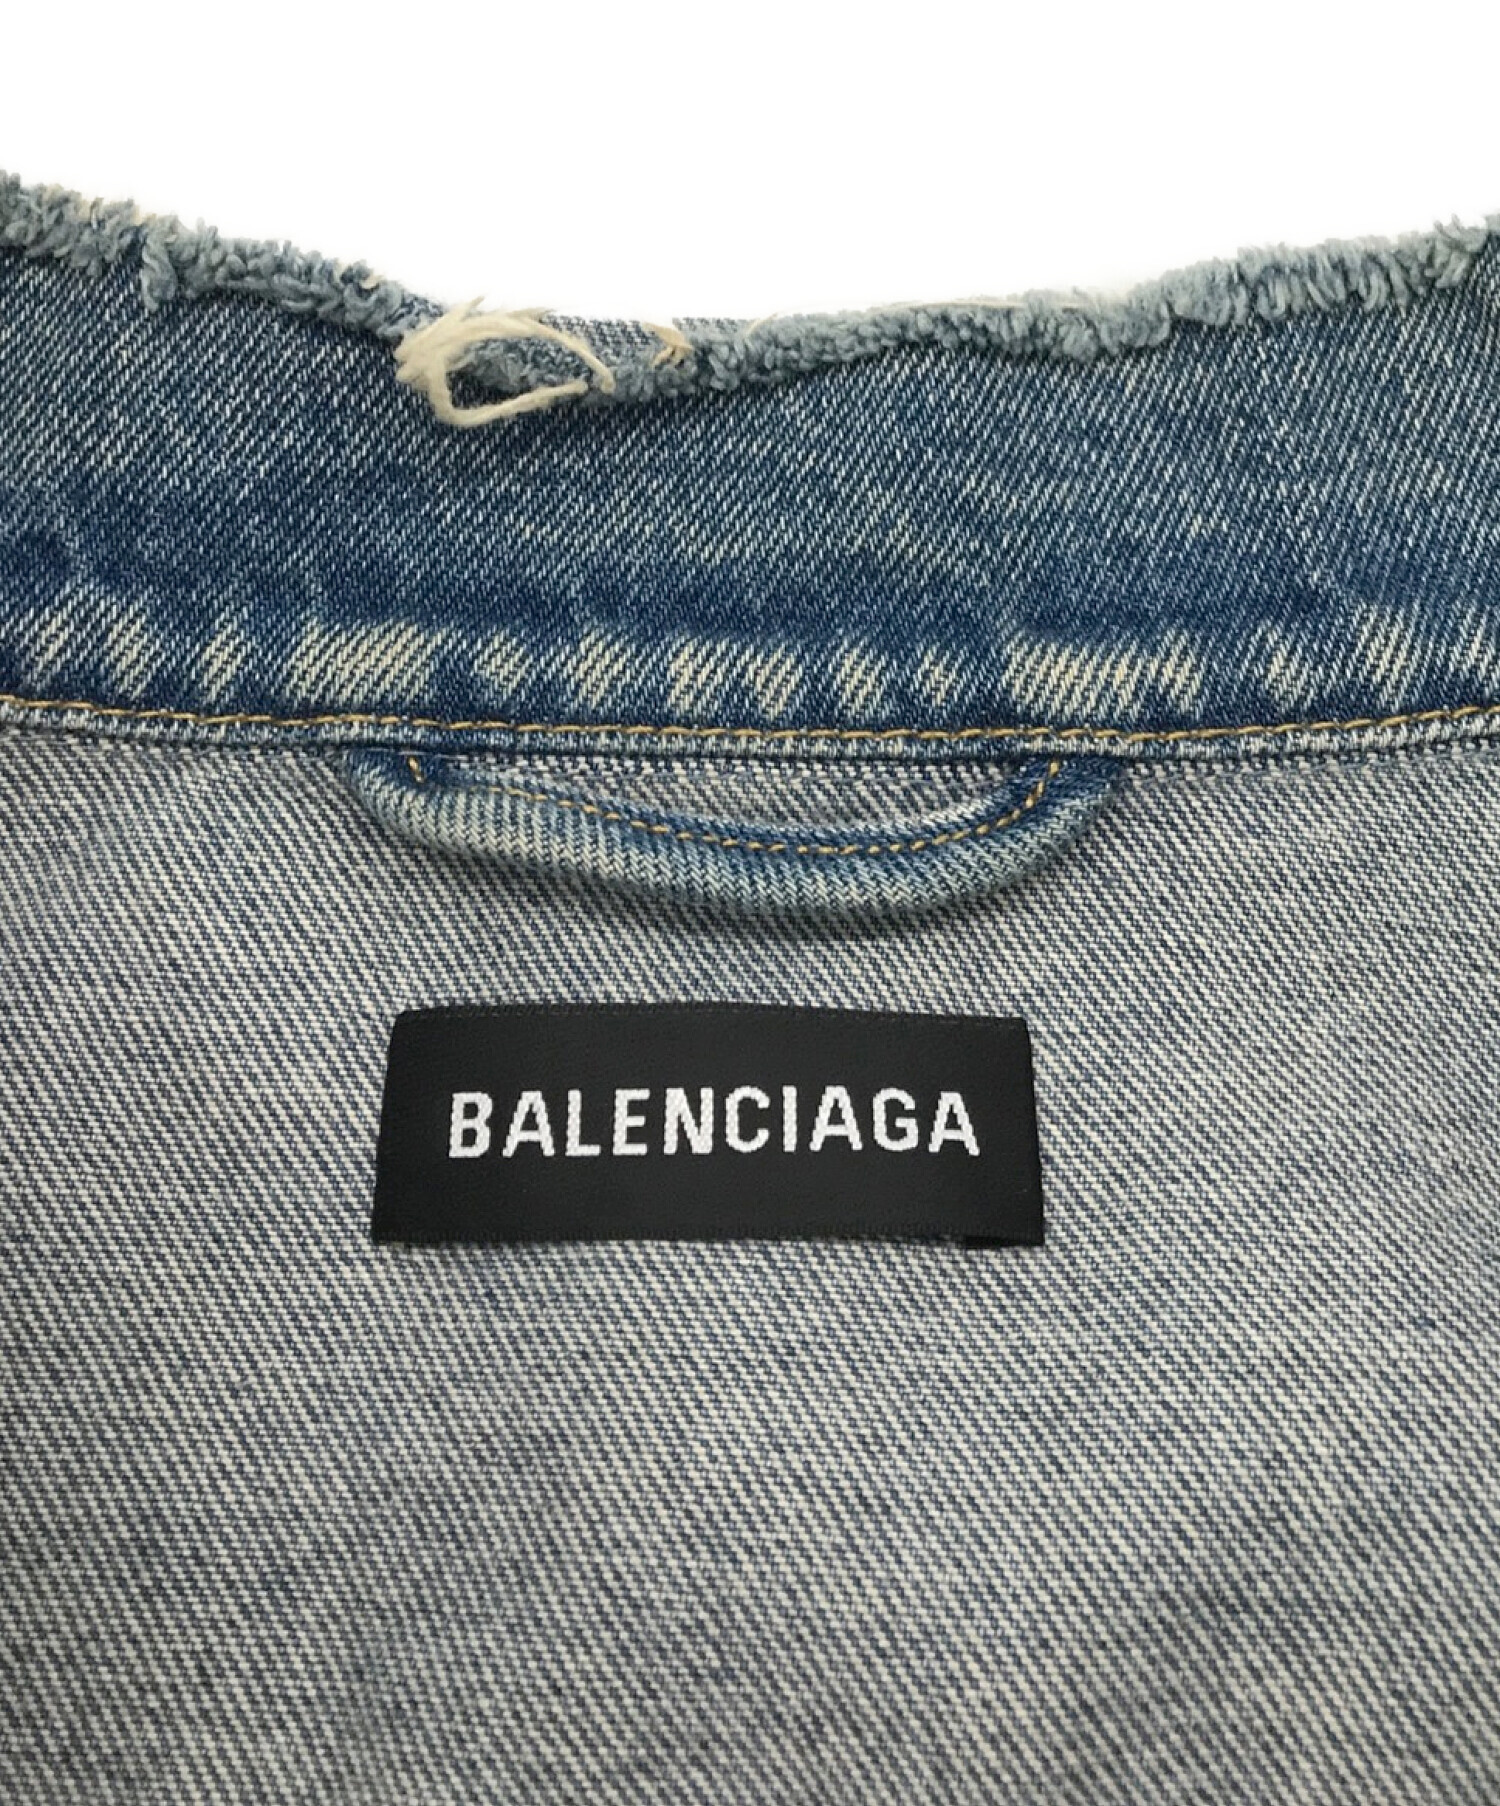 BALENCIAGA (バレンシアガ) Denim Embroidered Jacket ブルー サイズ:48